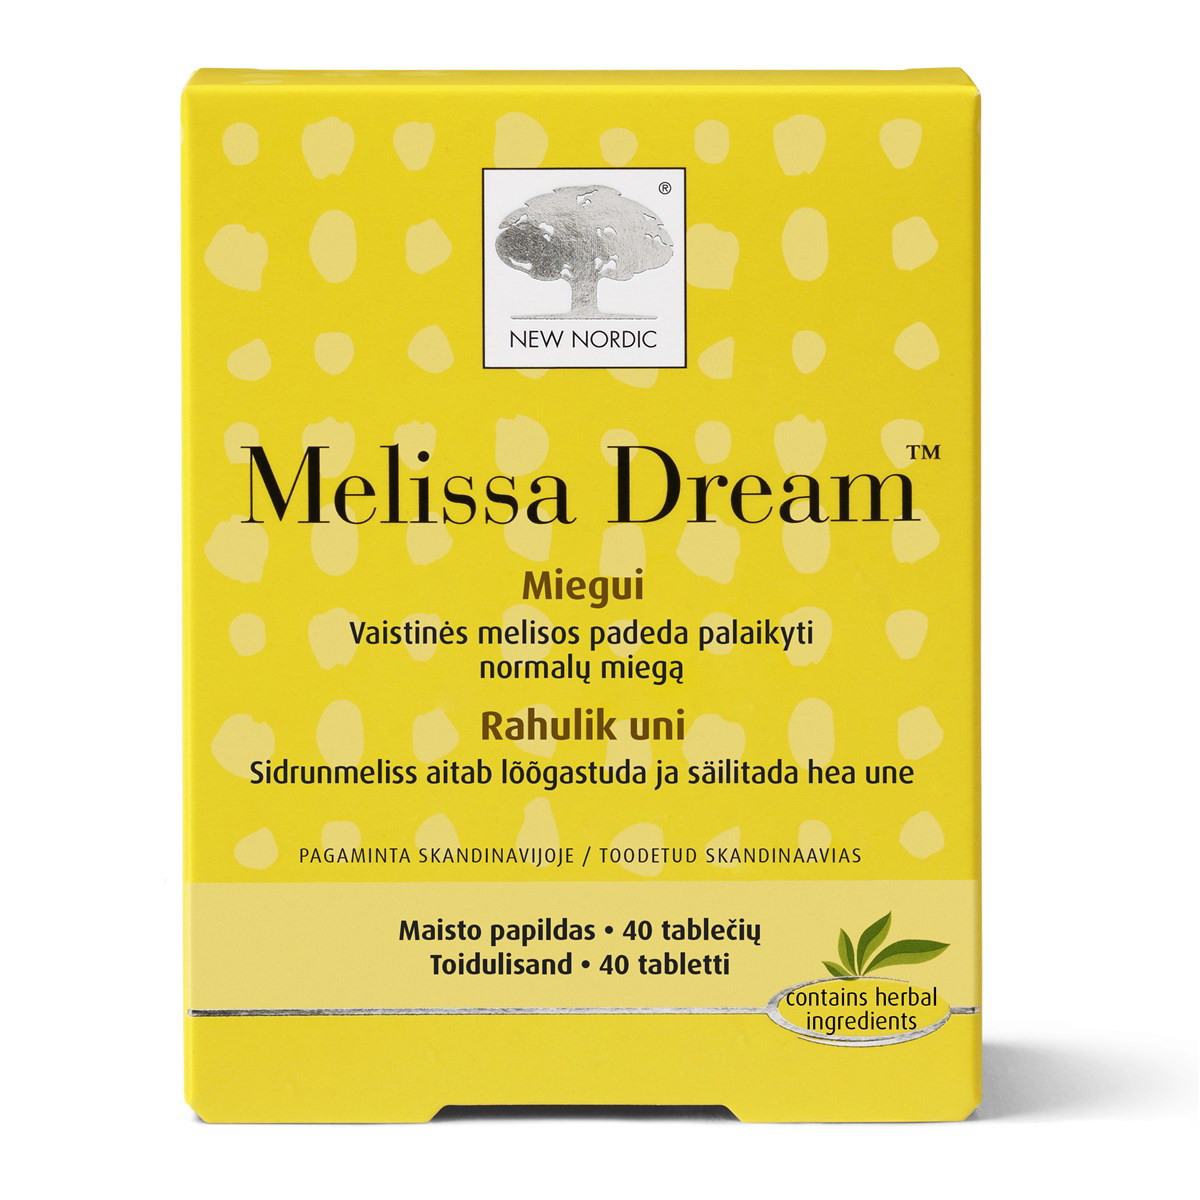 NEW NORDIC MELISSA DREAM, 40 tablečių